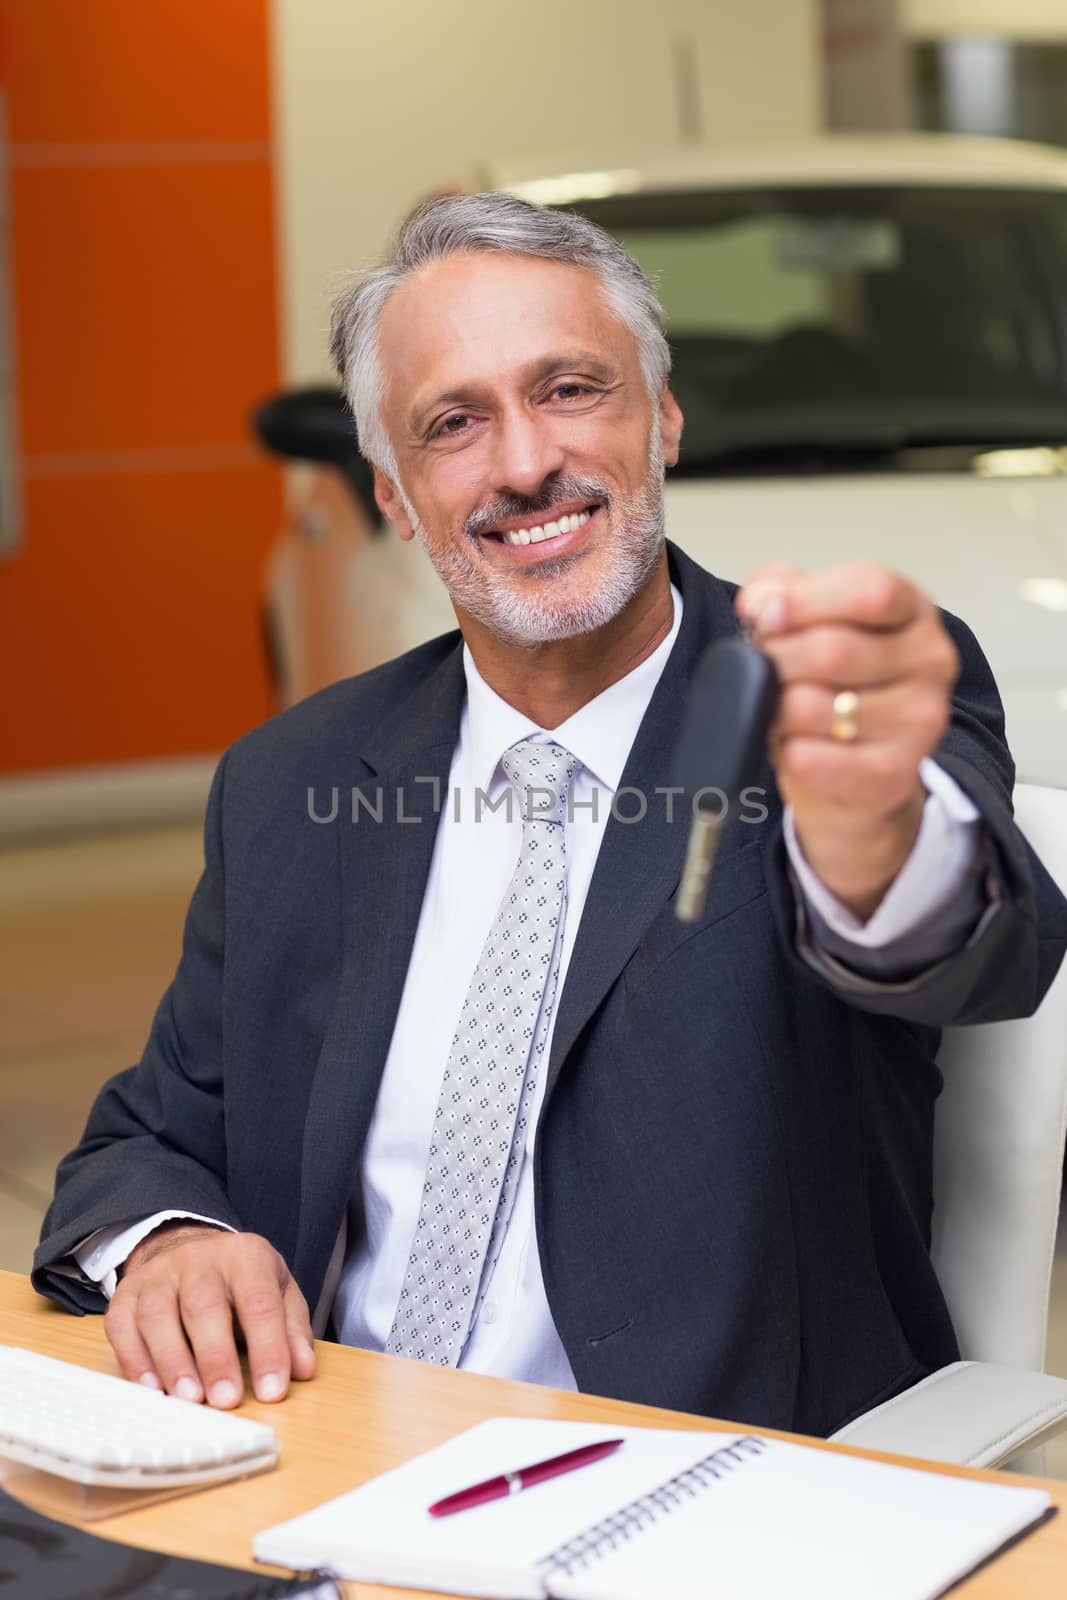 Smiling salesman giving a customer car keys at new car showroom